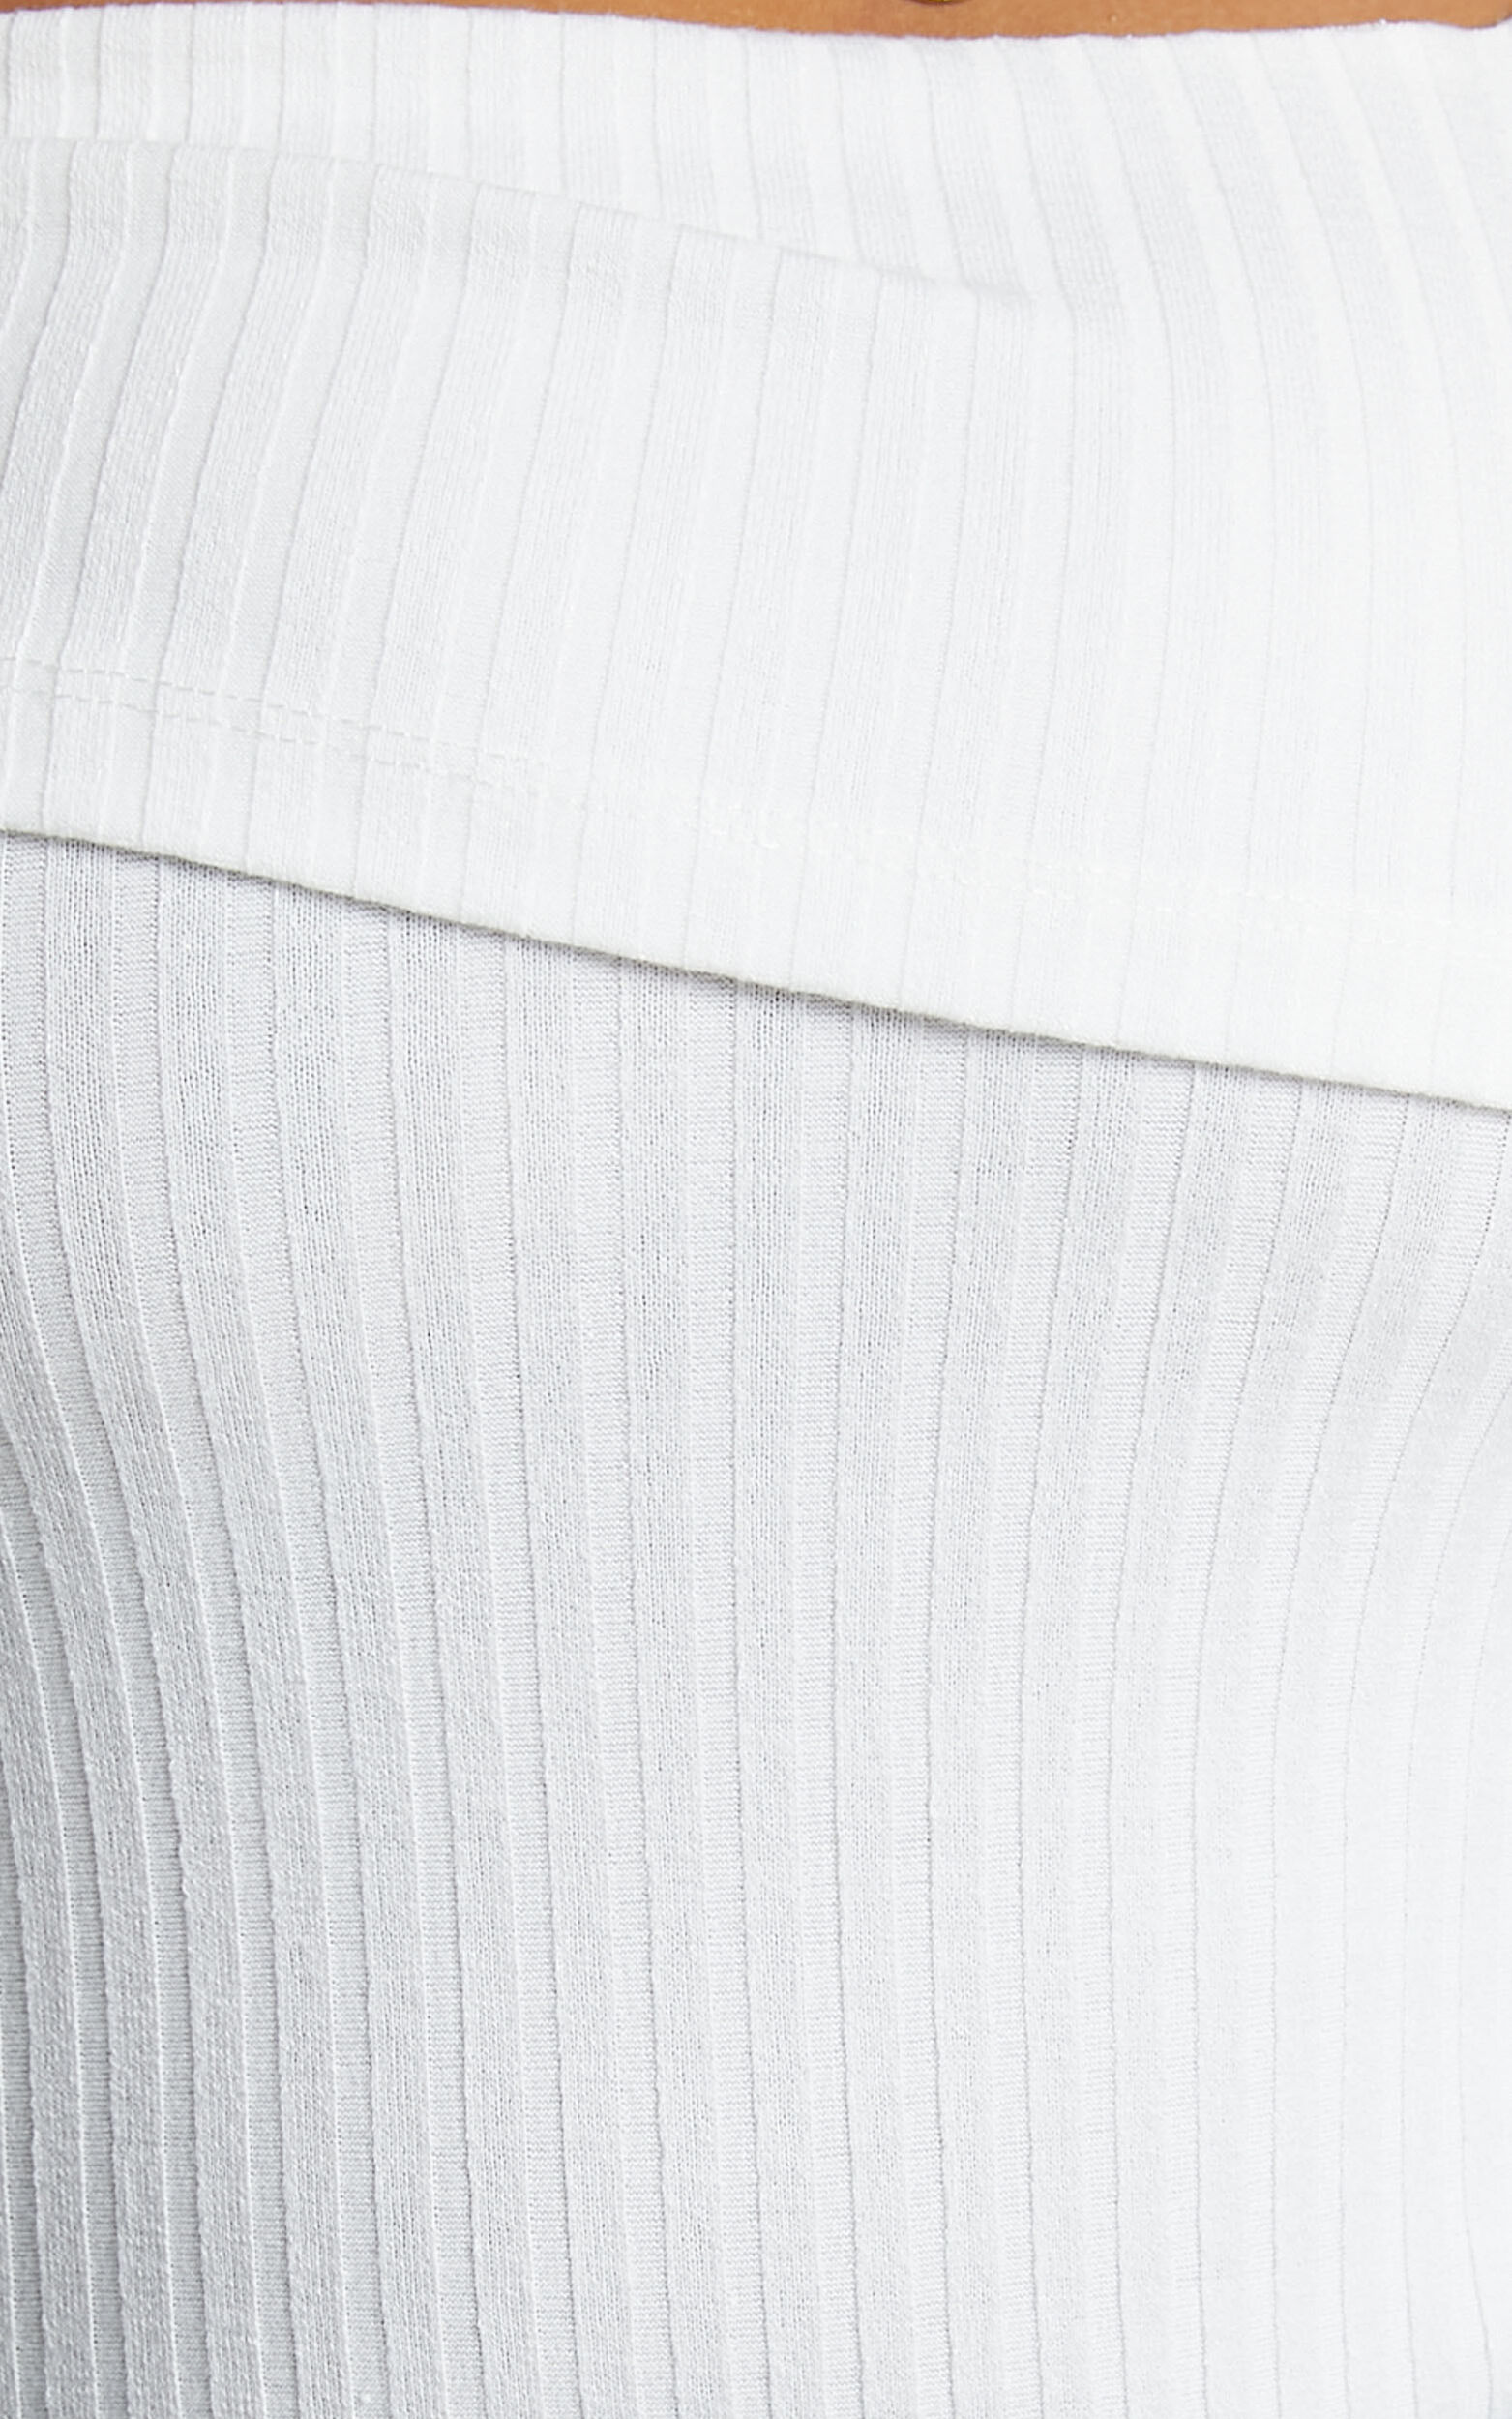 Harvie Assymmetrical Neckline with Long Sleeve Top in White | Showpo